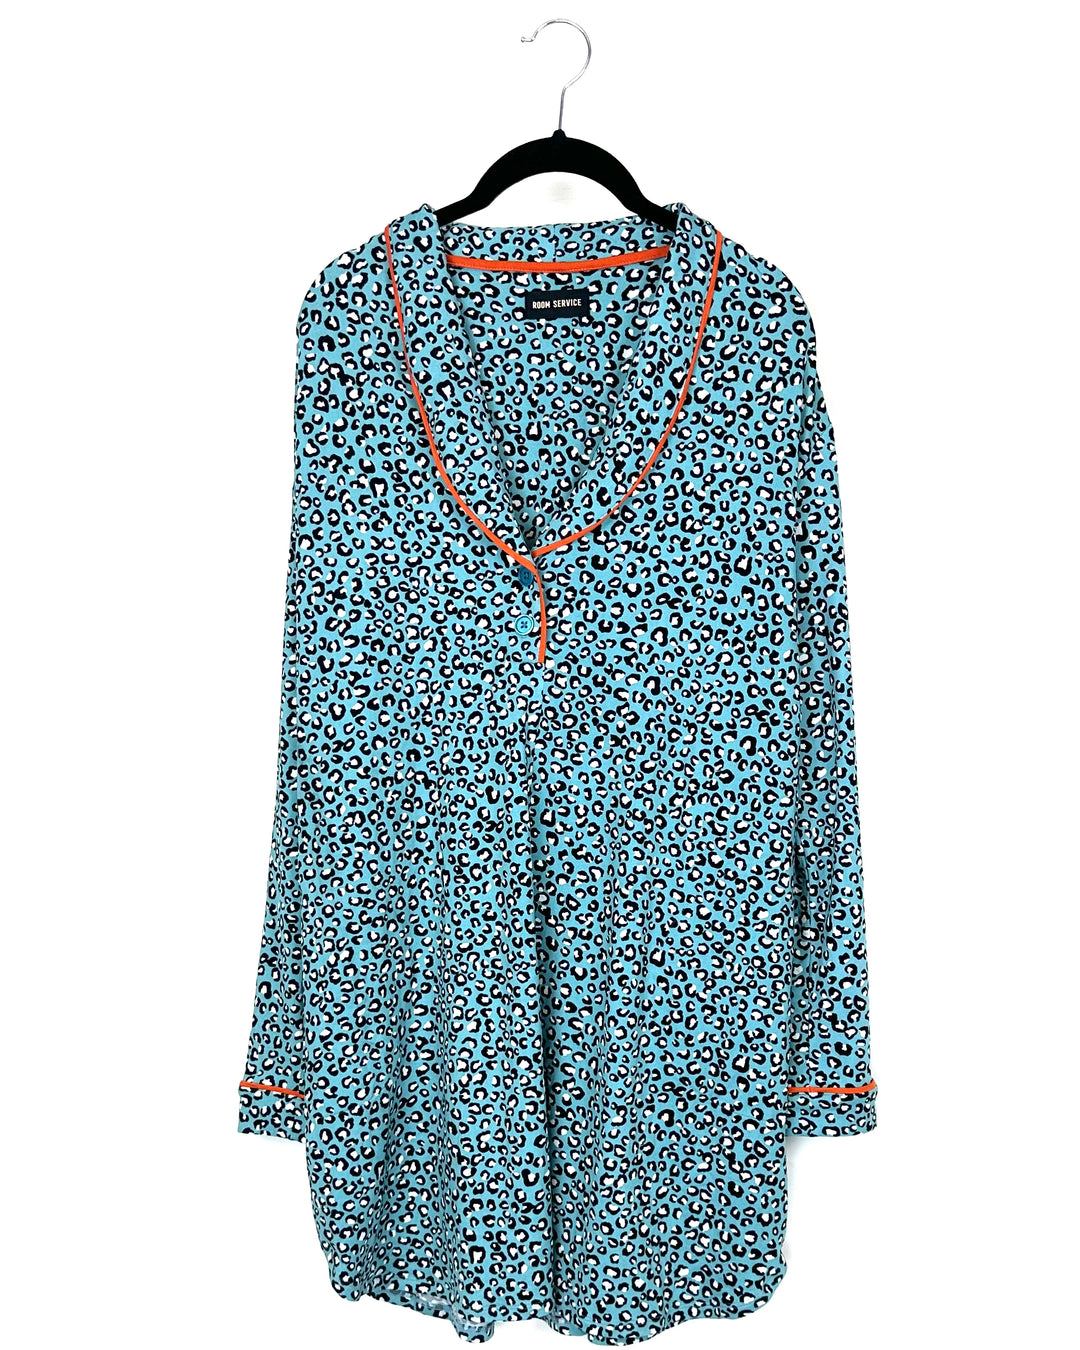 Blue Cheetah Printed Nightgown - Medium